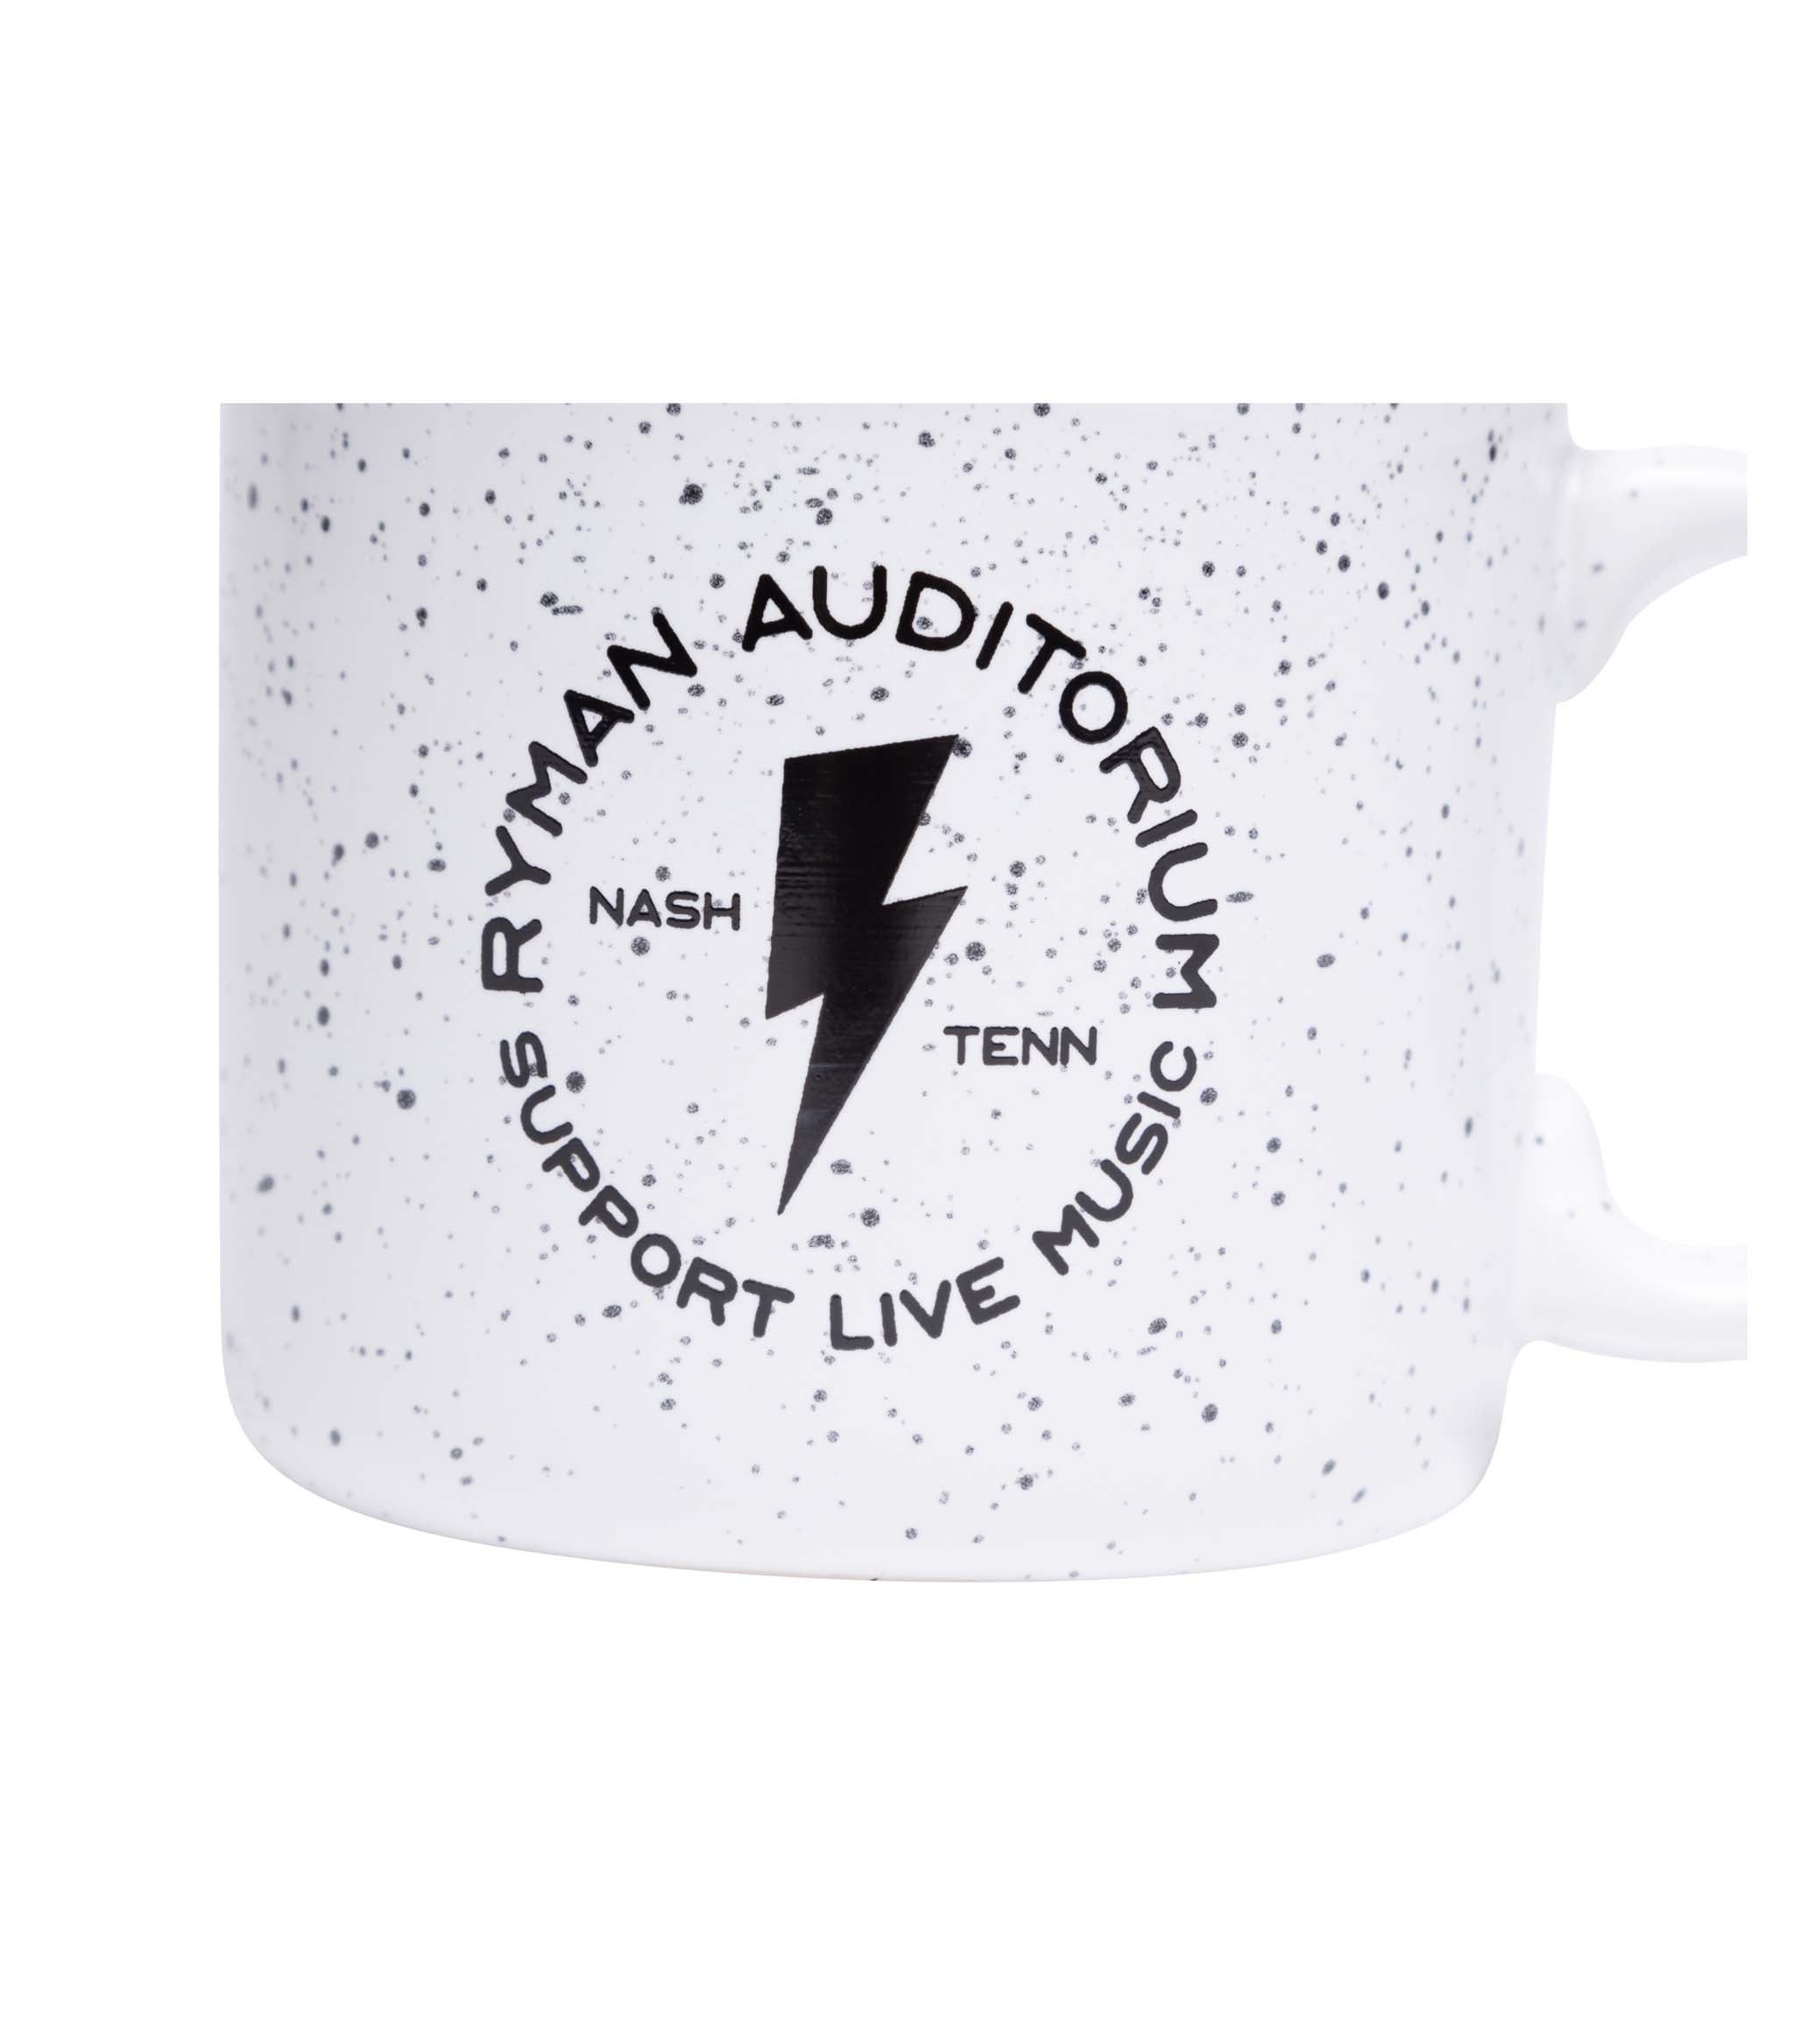 Ryman Support Live Music Campfire Mug